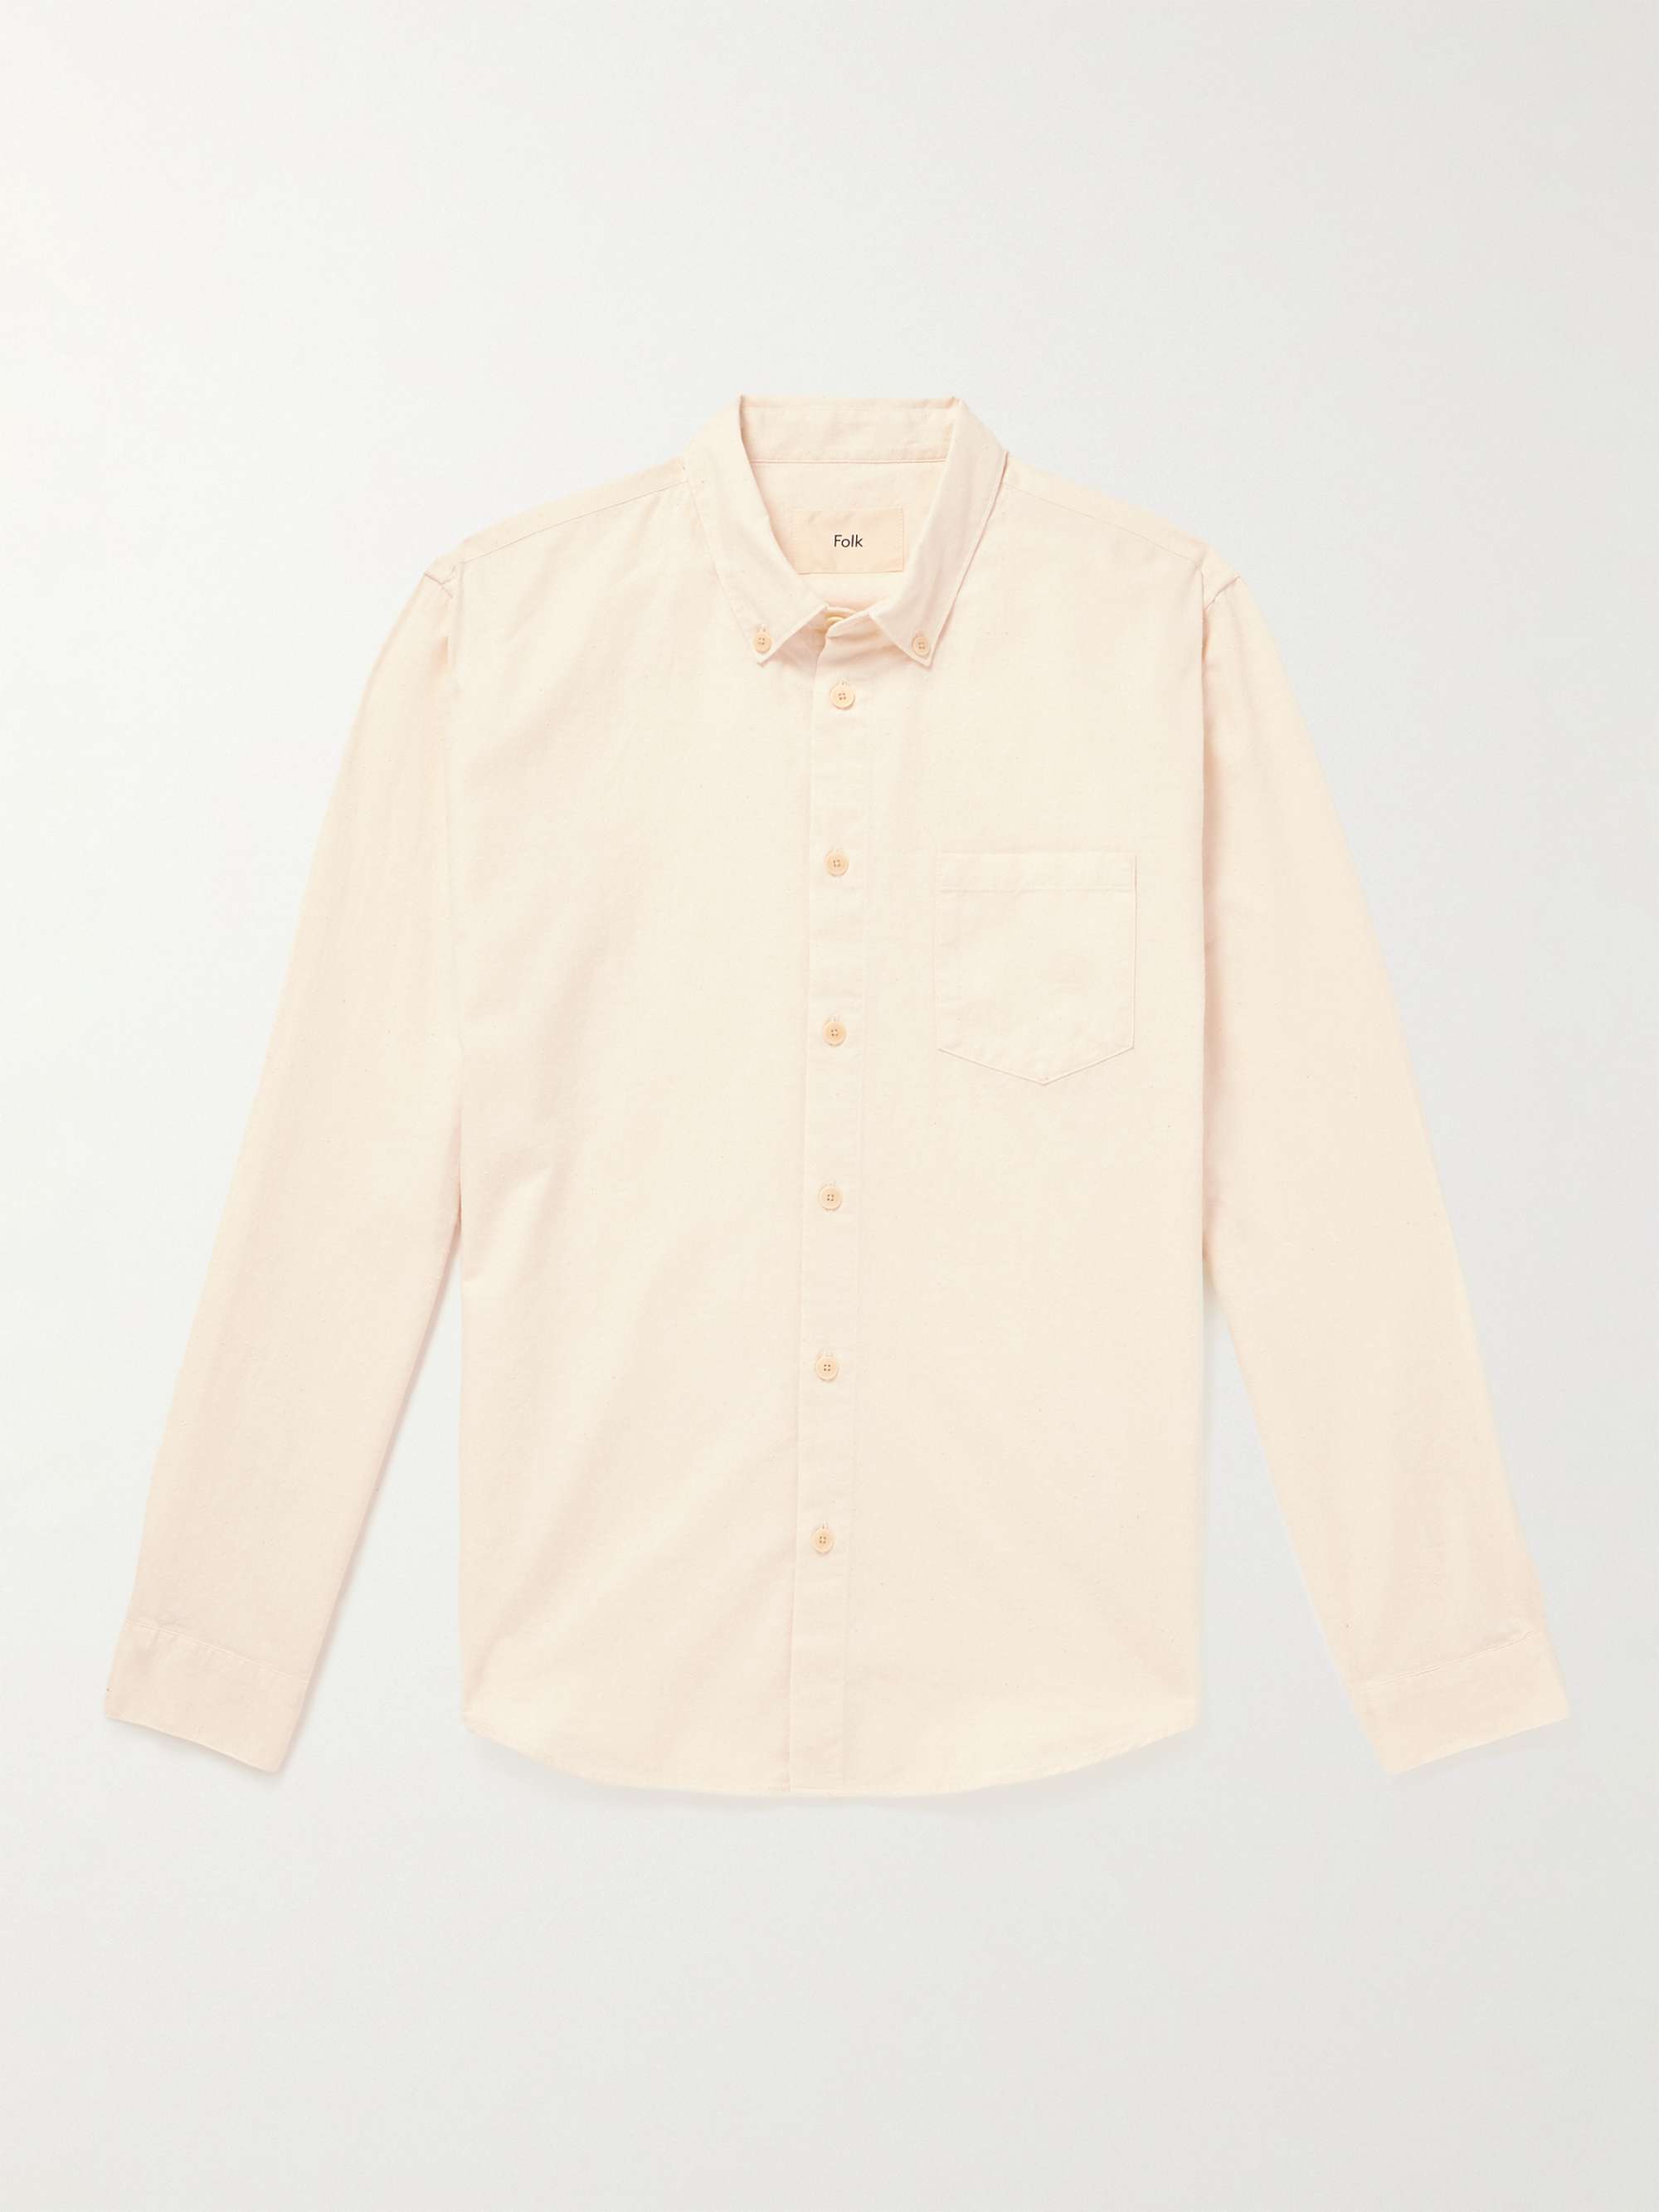 FOLK Button-Down Collar Slub Cotton Shirt for Men | MR PORTER